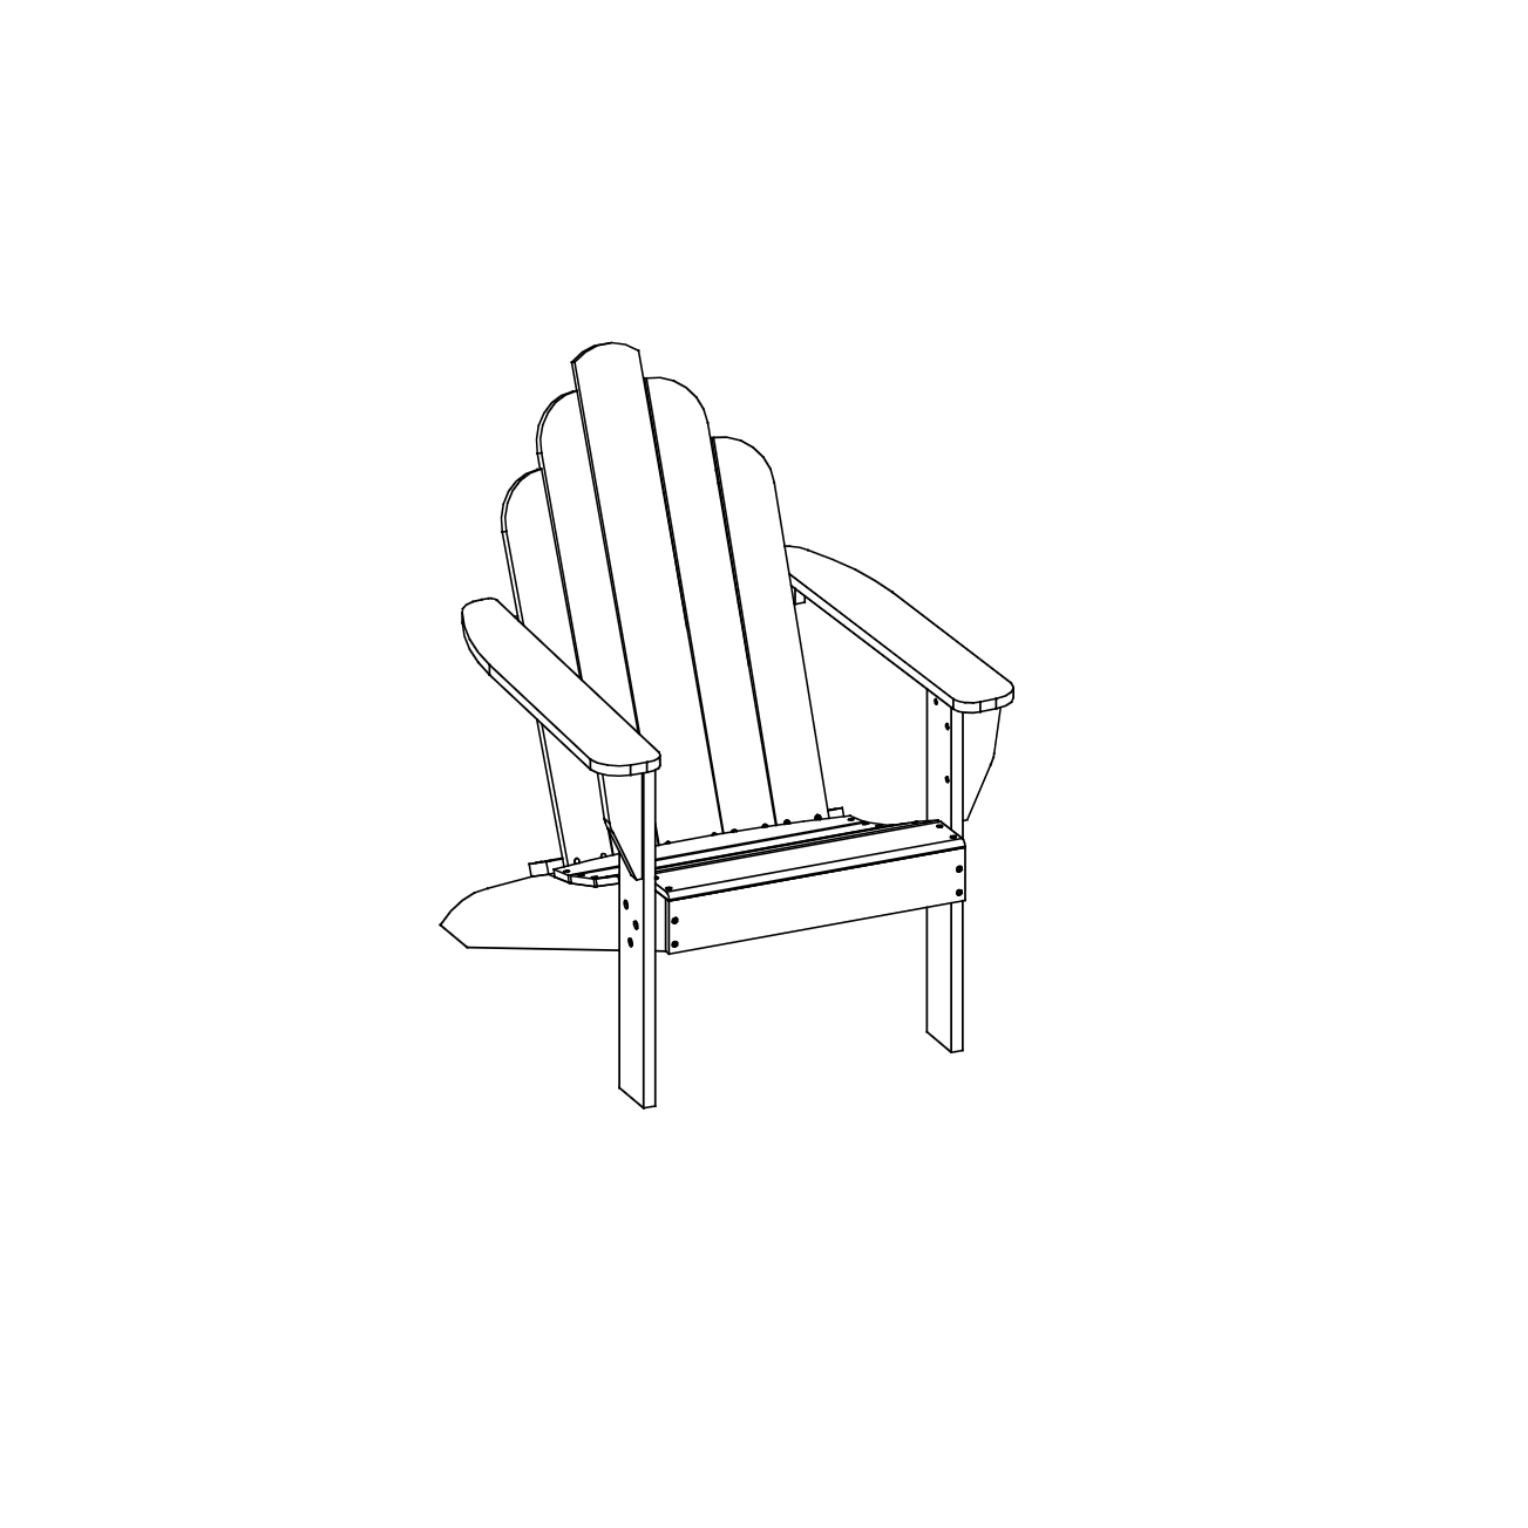 cambridge Teak Adirondack Chair Instructions